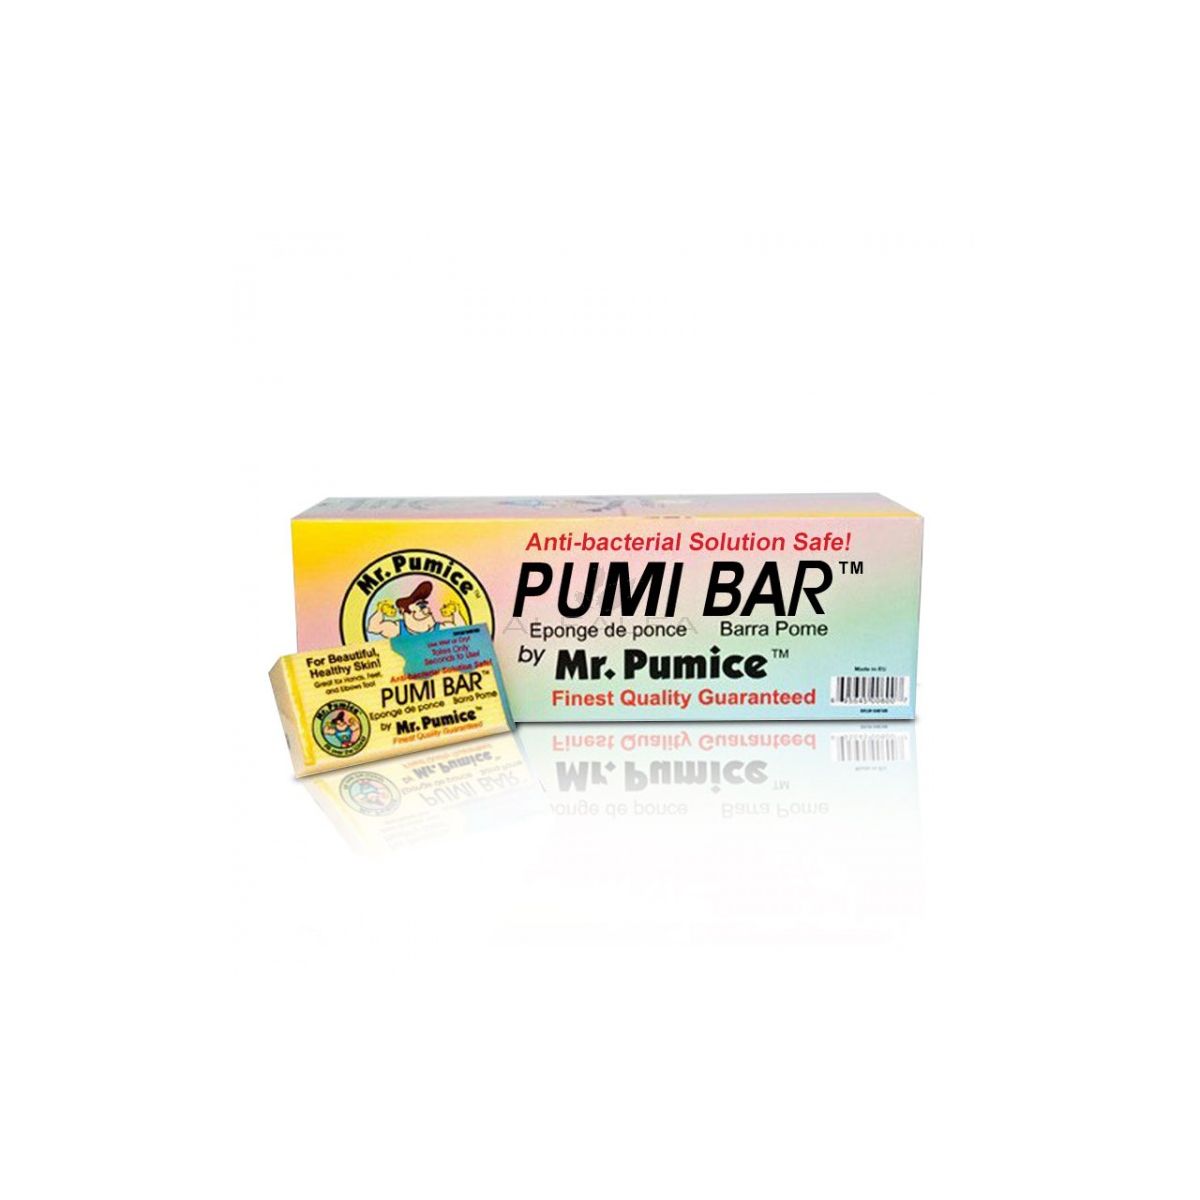 Mr. Pumice Pumi Bar 